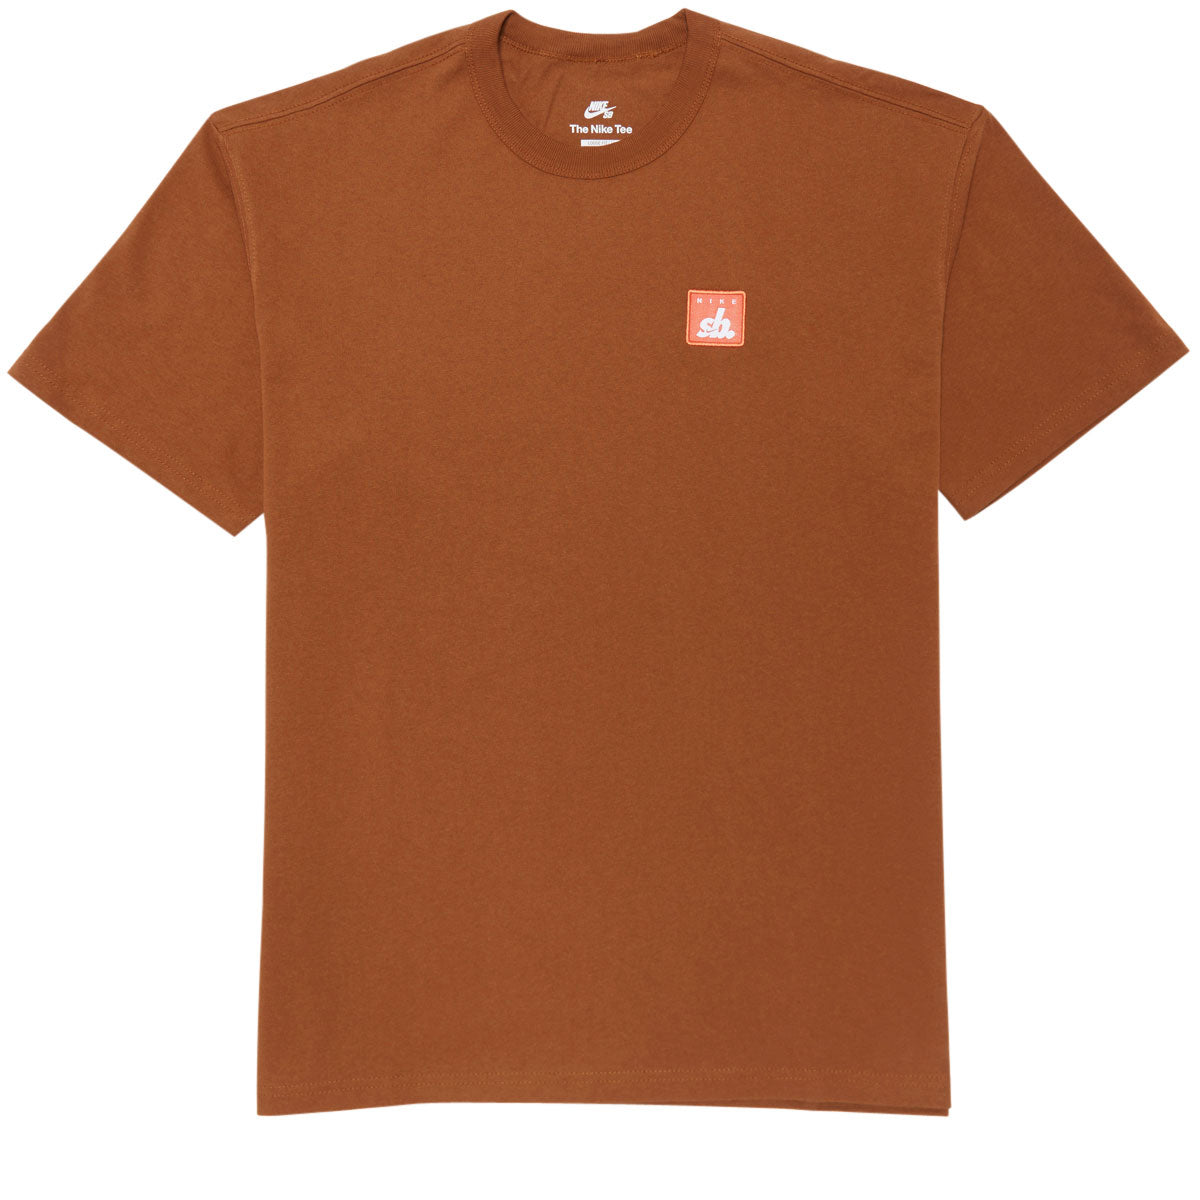 Nike SB Lowercase T-Shirt - Light British Tan image 1